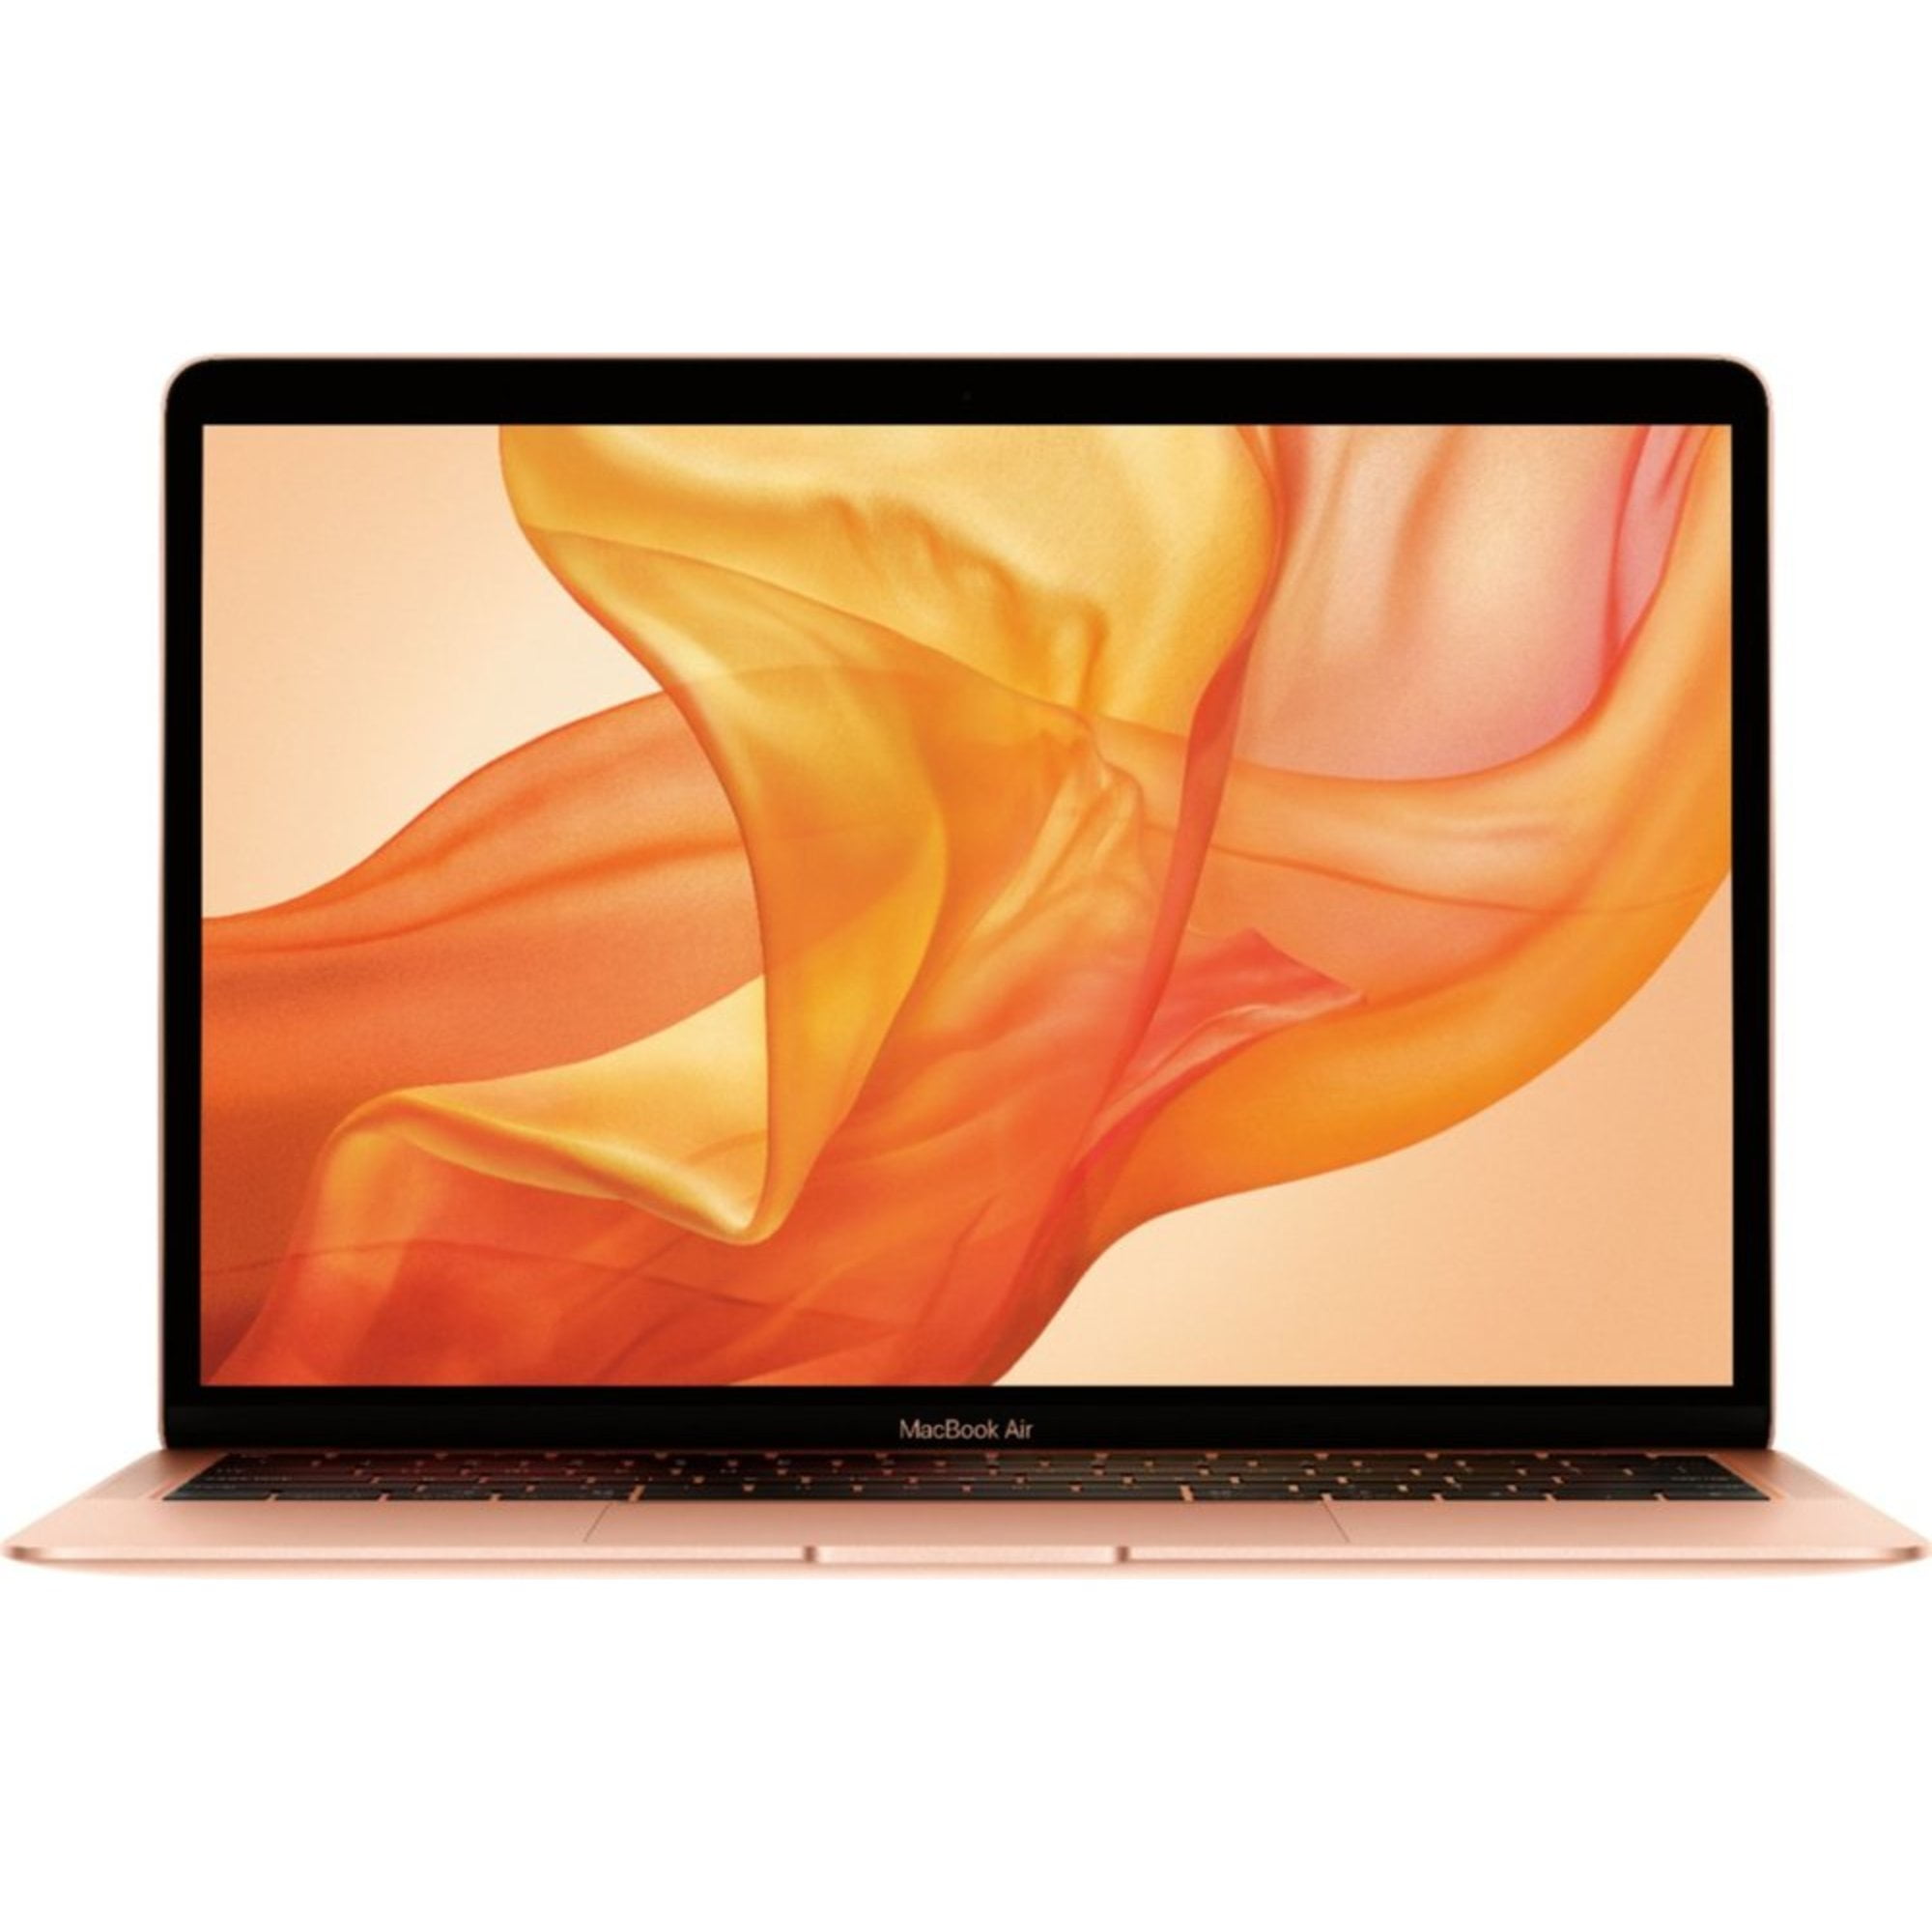 Restored Apple MacBook Air 13.3 2018 128GB MREE2LL/A - Gold (Refurbished)